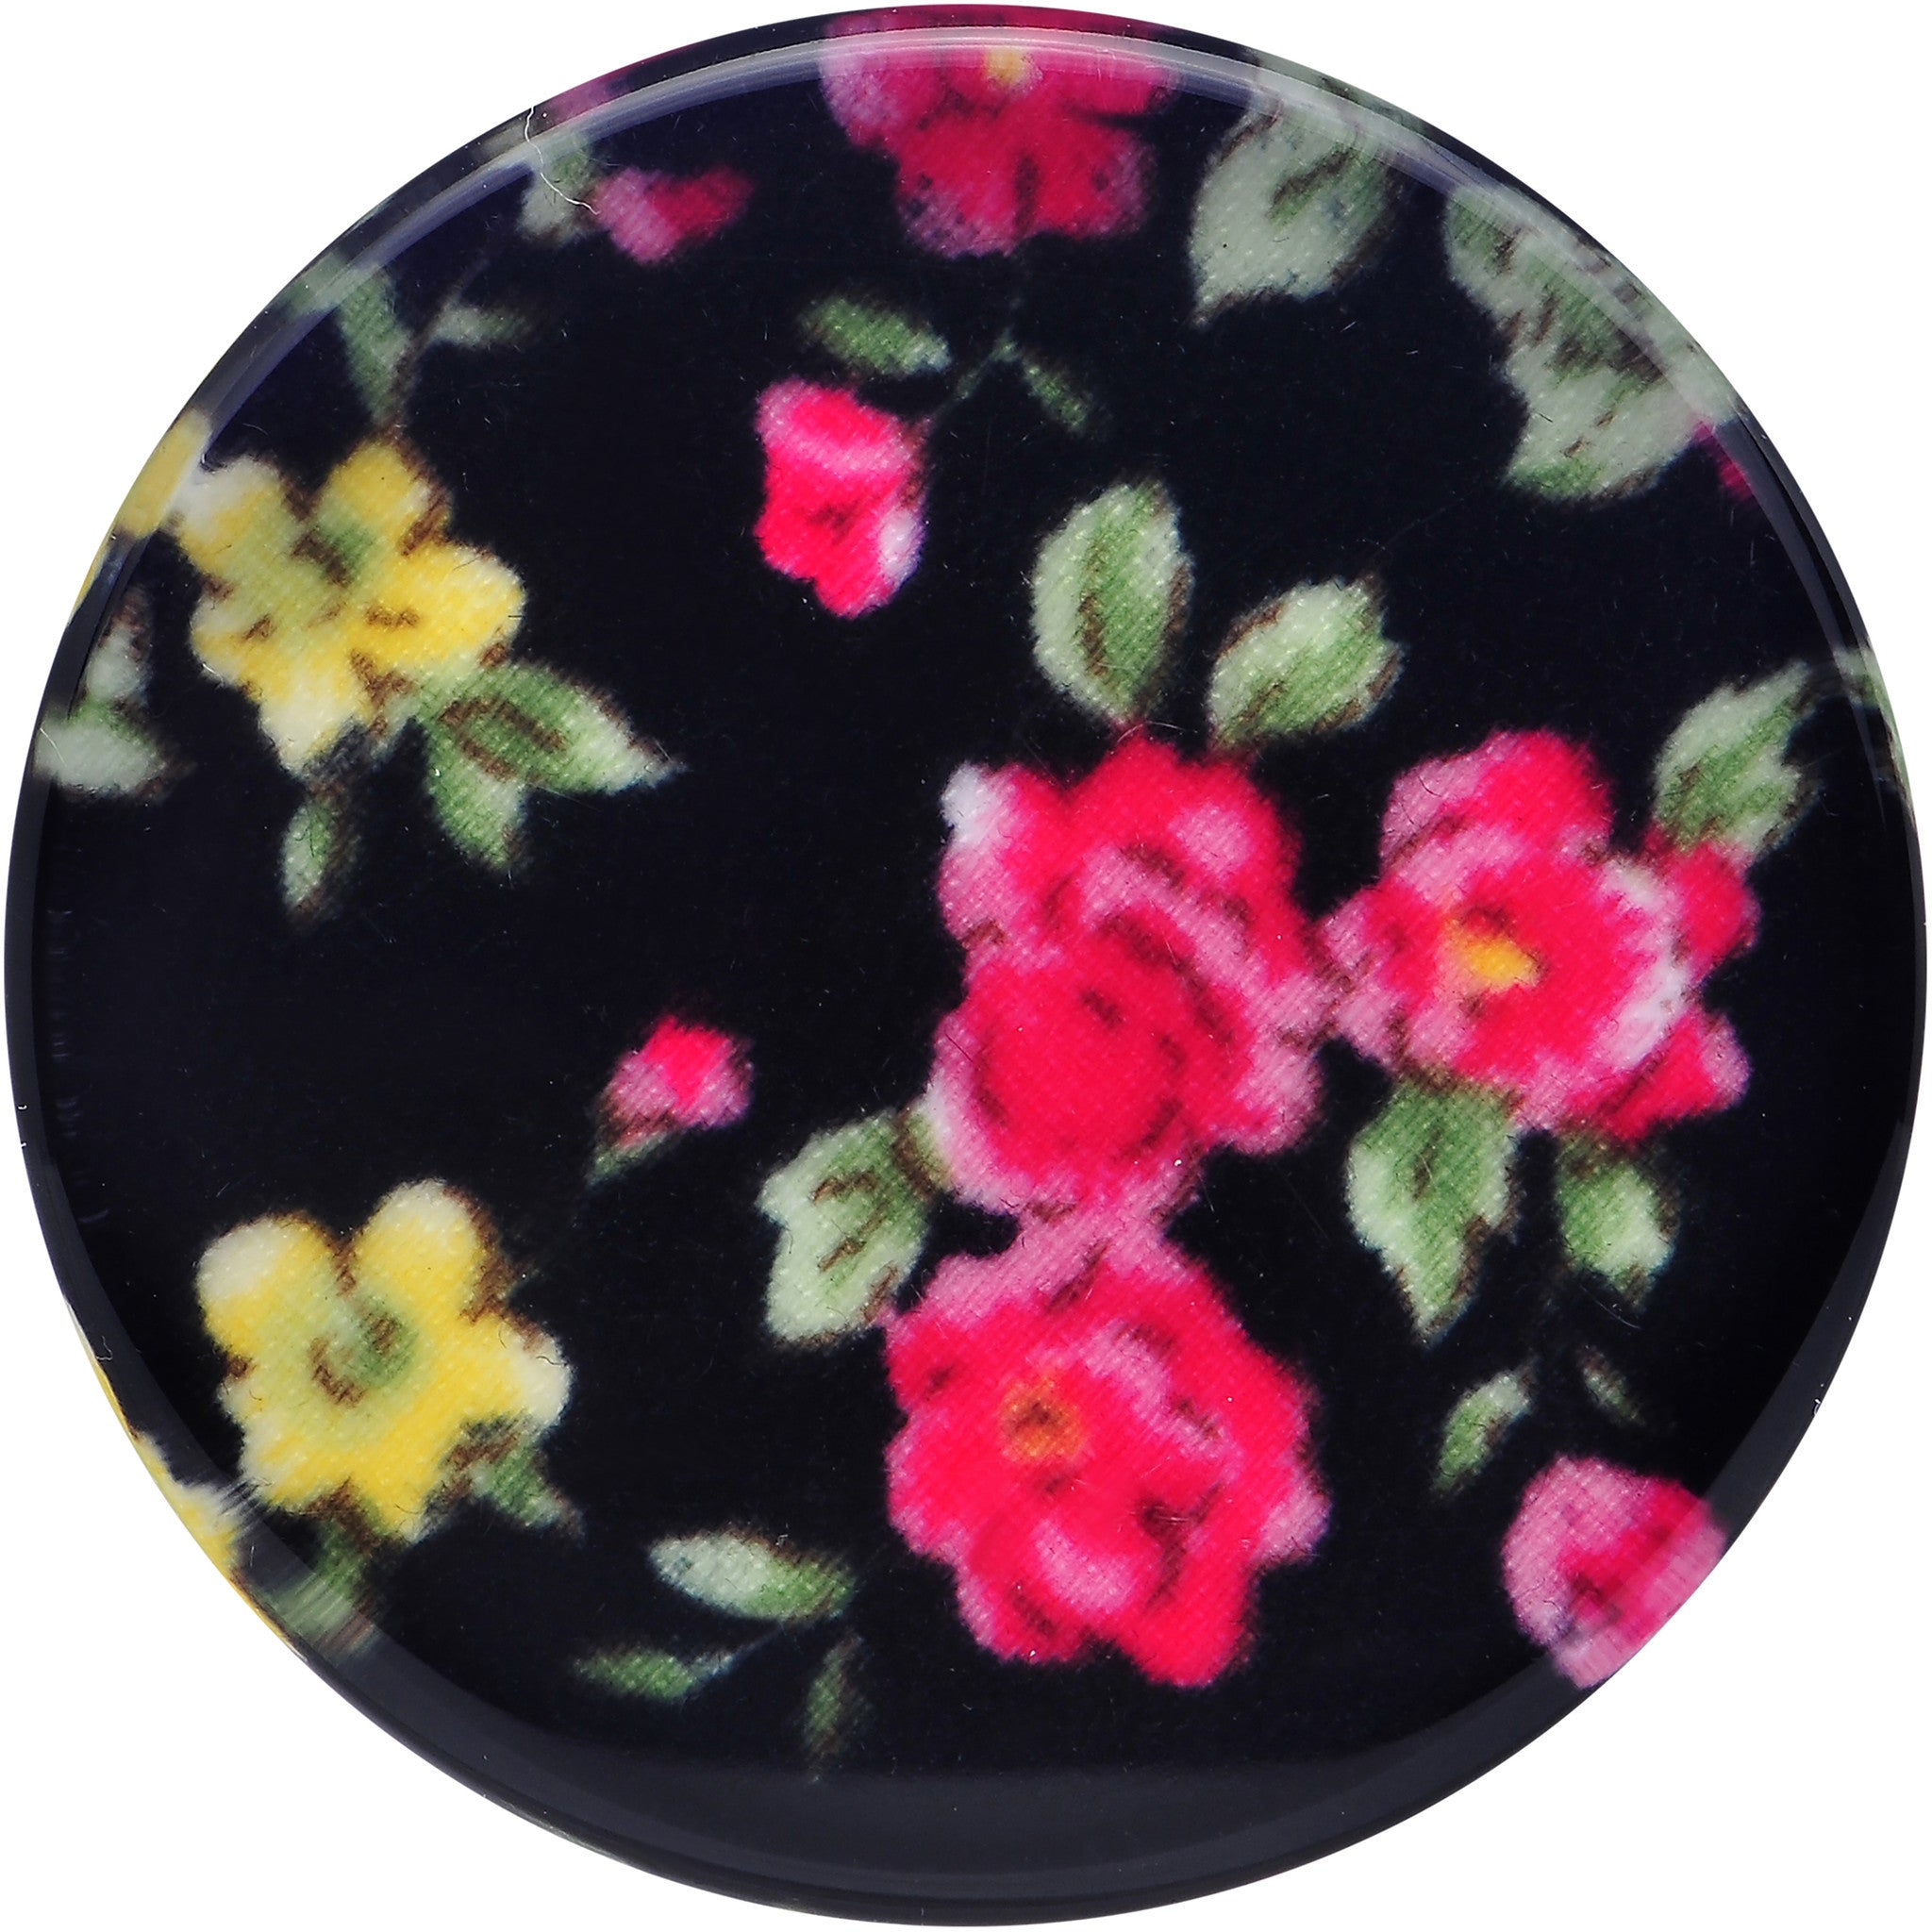 24mm Acrylic Black Multicolored Old Fashioned Flowers Saddle Plug